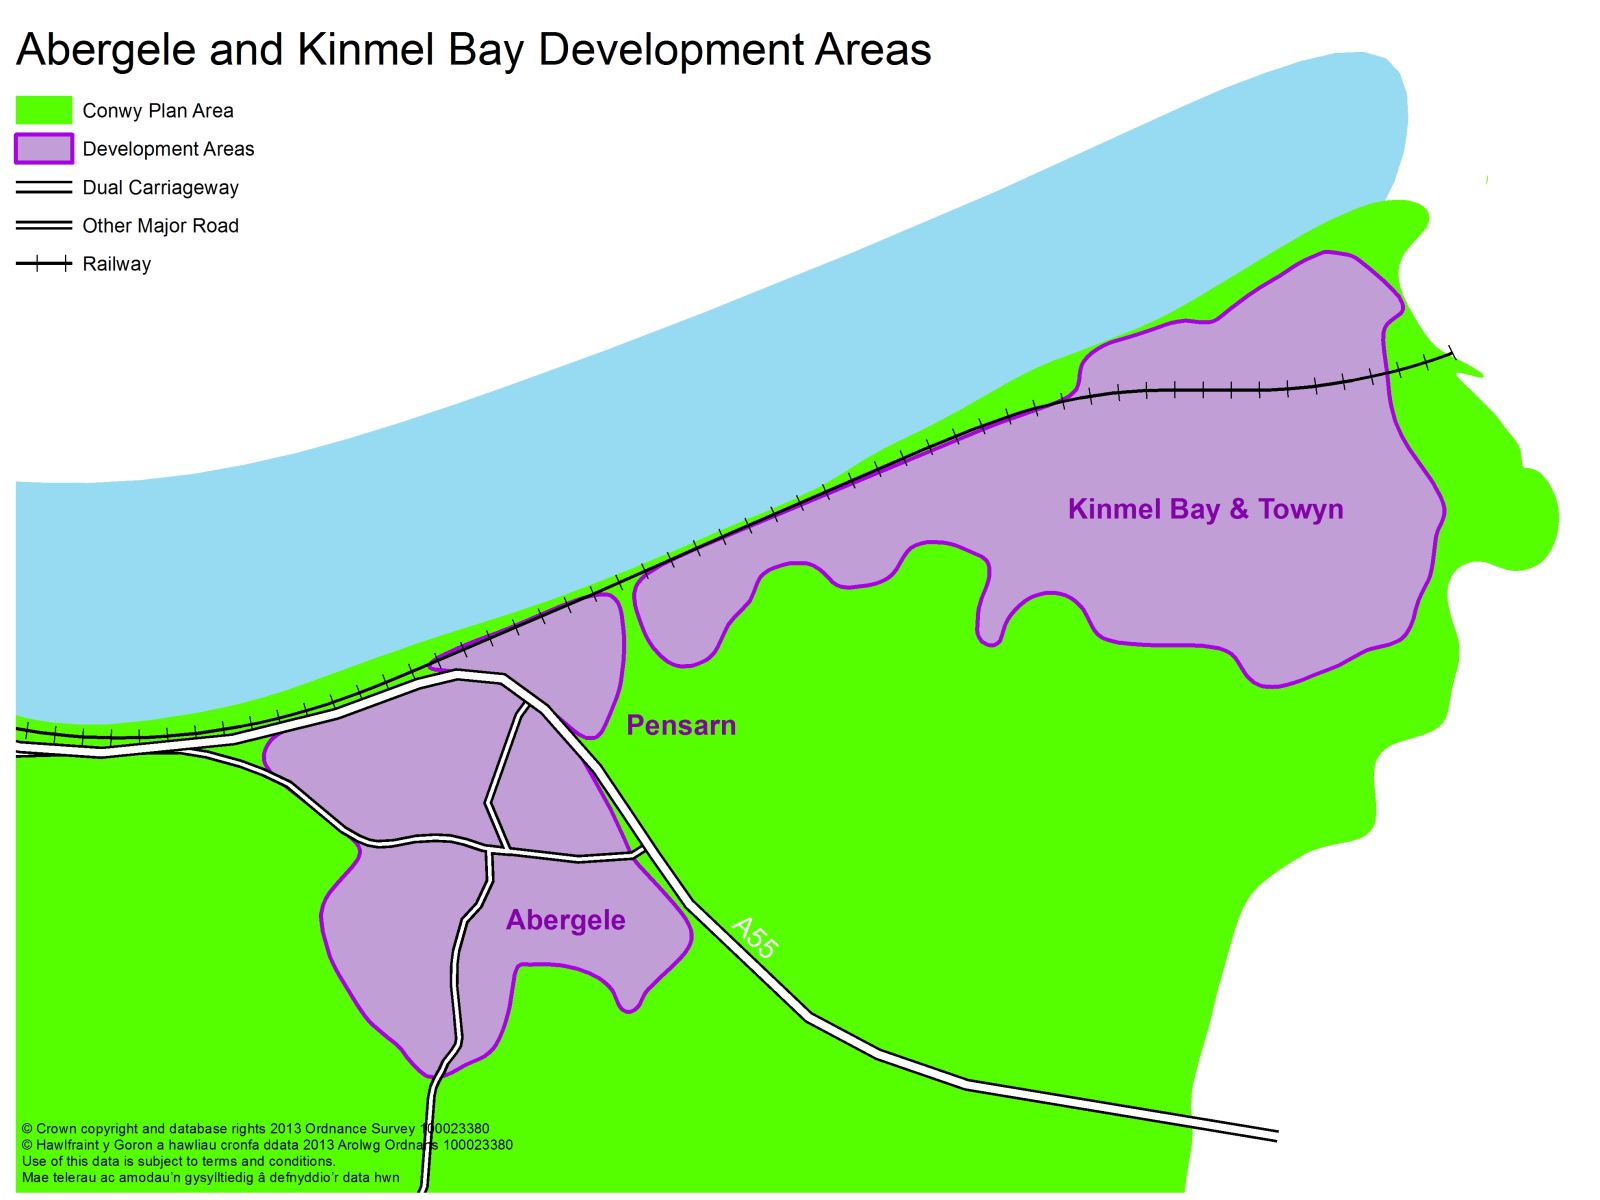 Abergele, Towyn and Kinmel Bay (including Pensarn) Development Areas